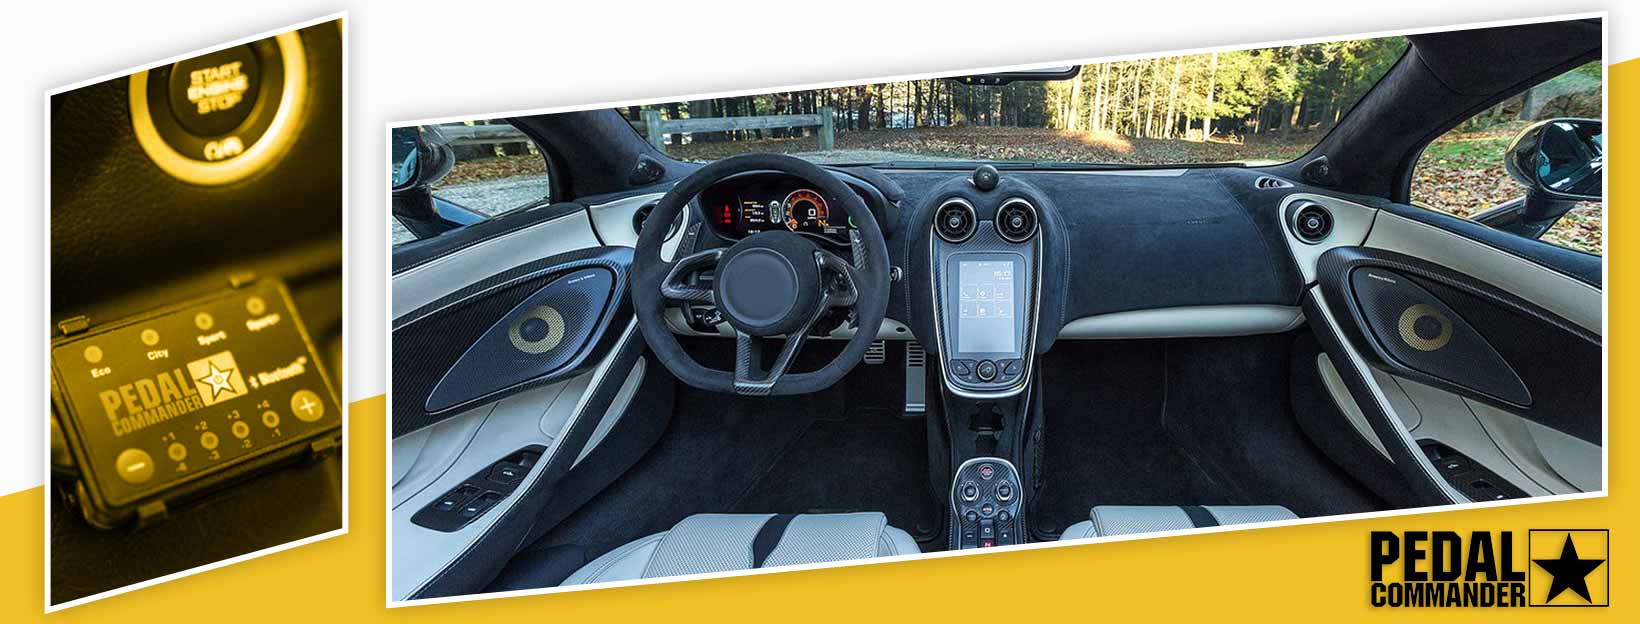 Pedal Commander for McLaren 570s - interior